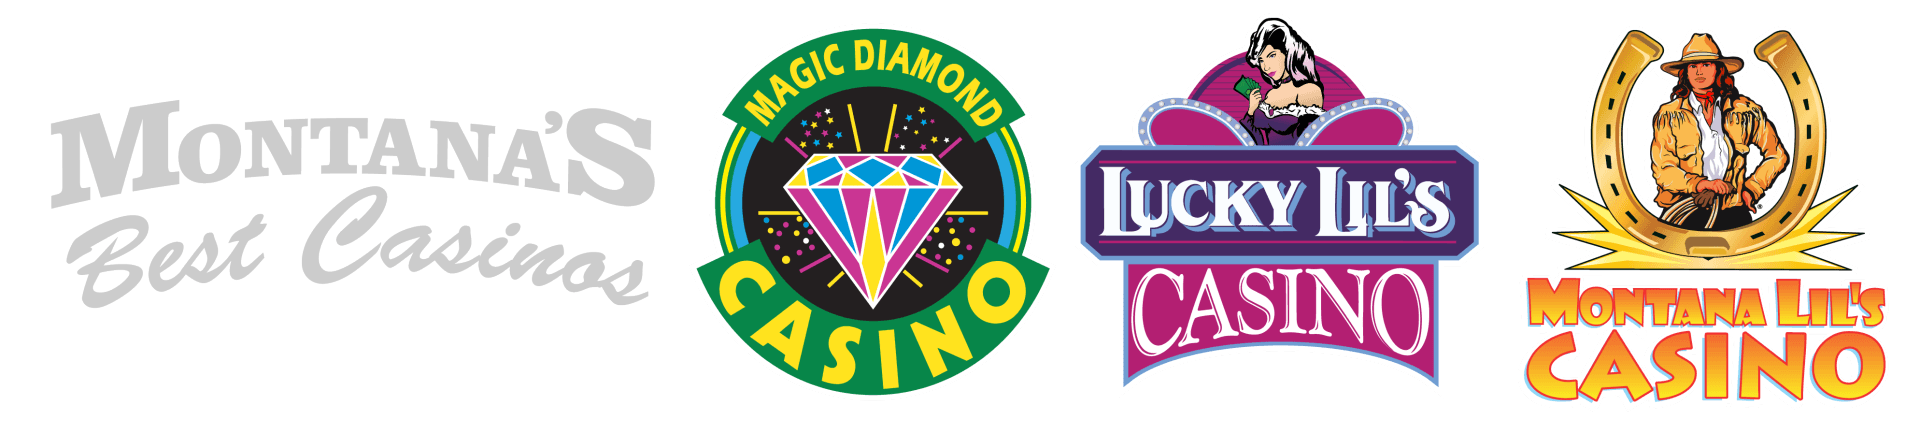 Montana's Best Casinos logos